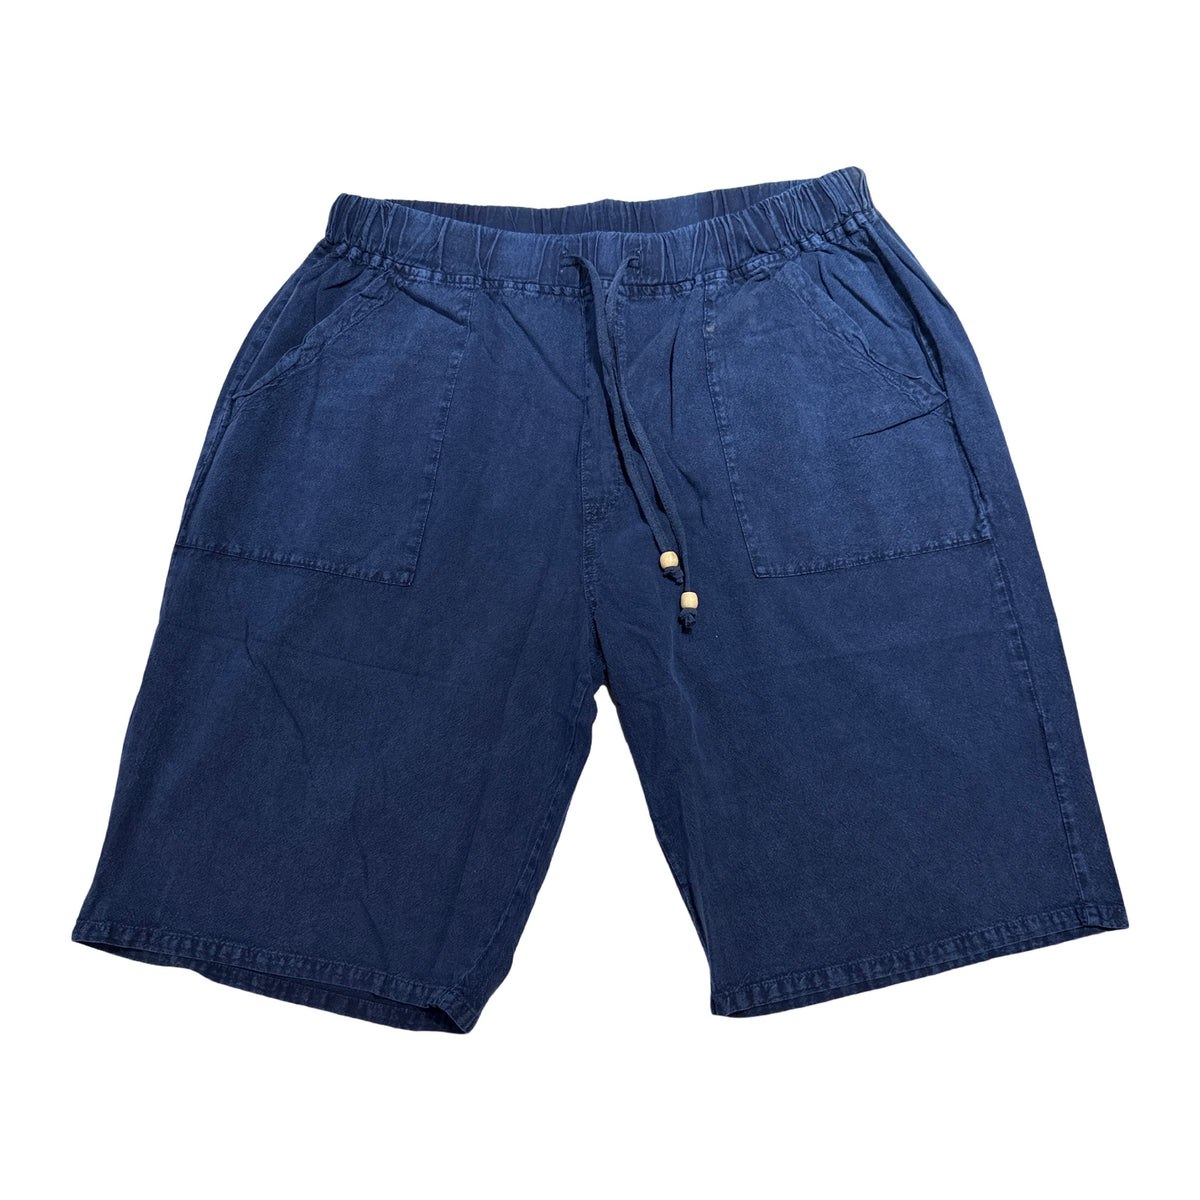 Seaspice Navy Double Pocket Peruvian Cotton Shorts - Dudes Boutique